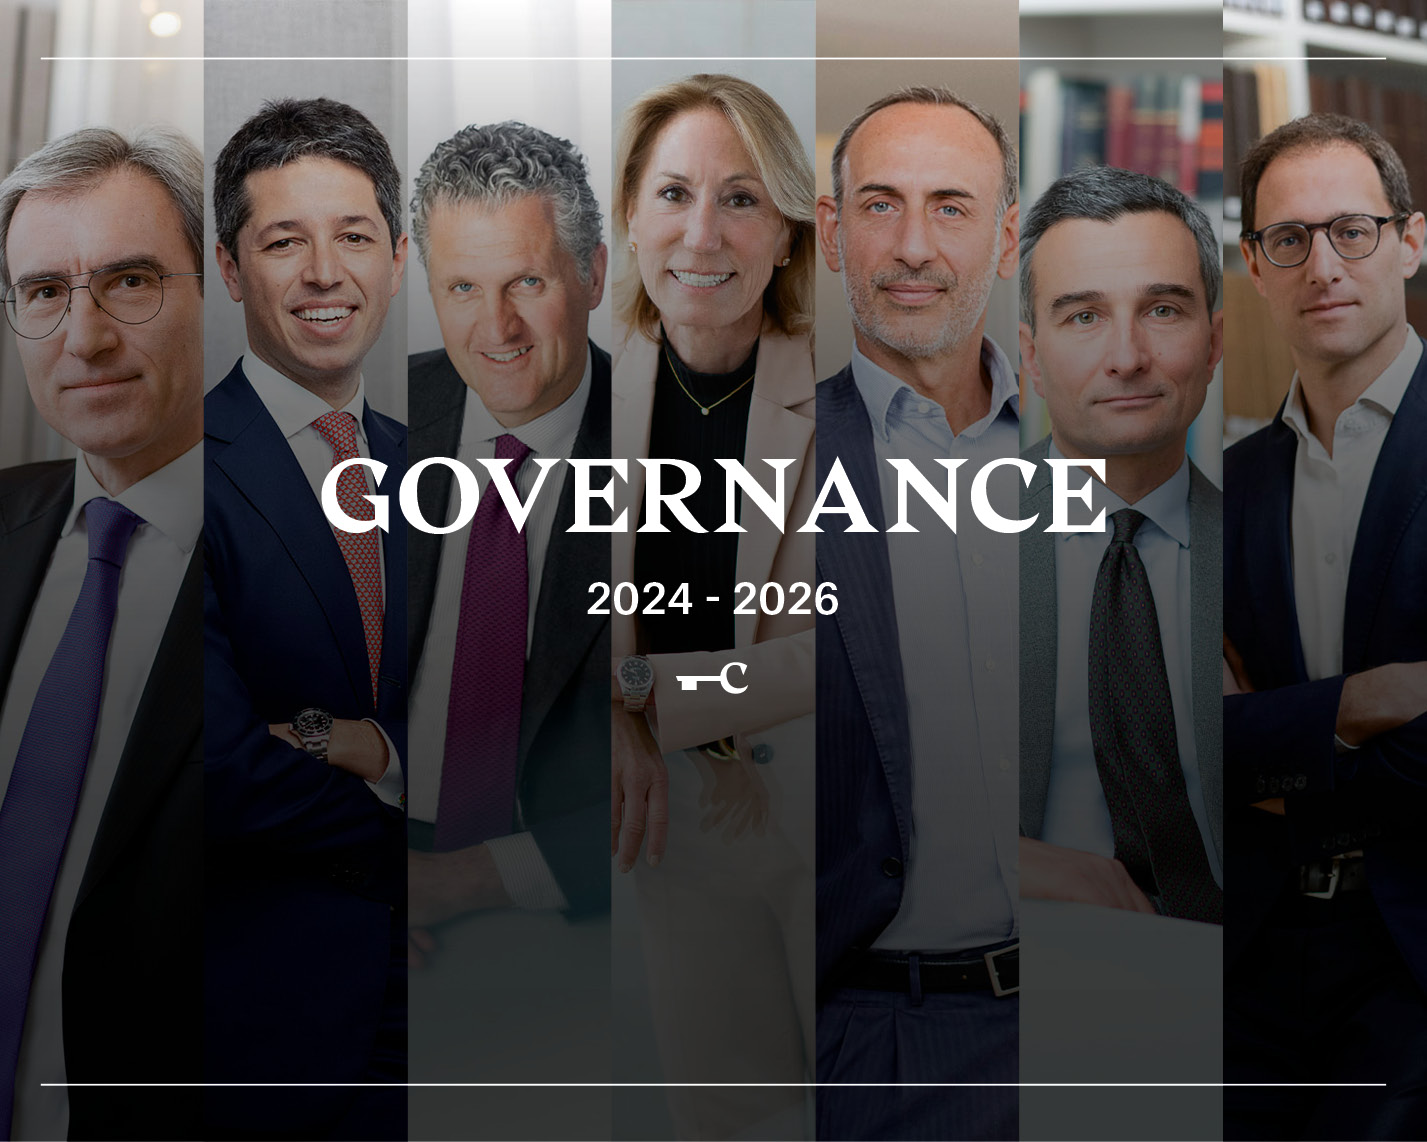 Governance 2024-2026